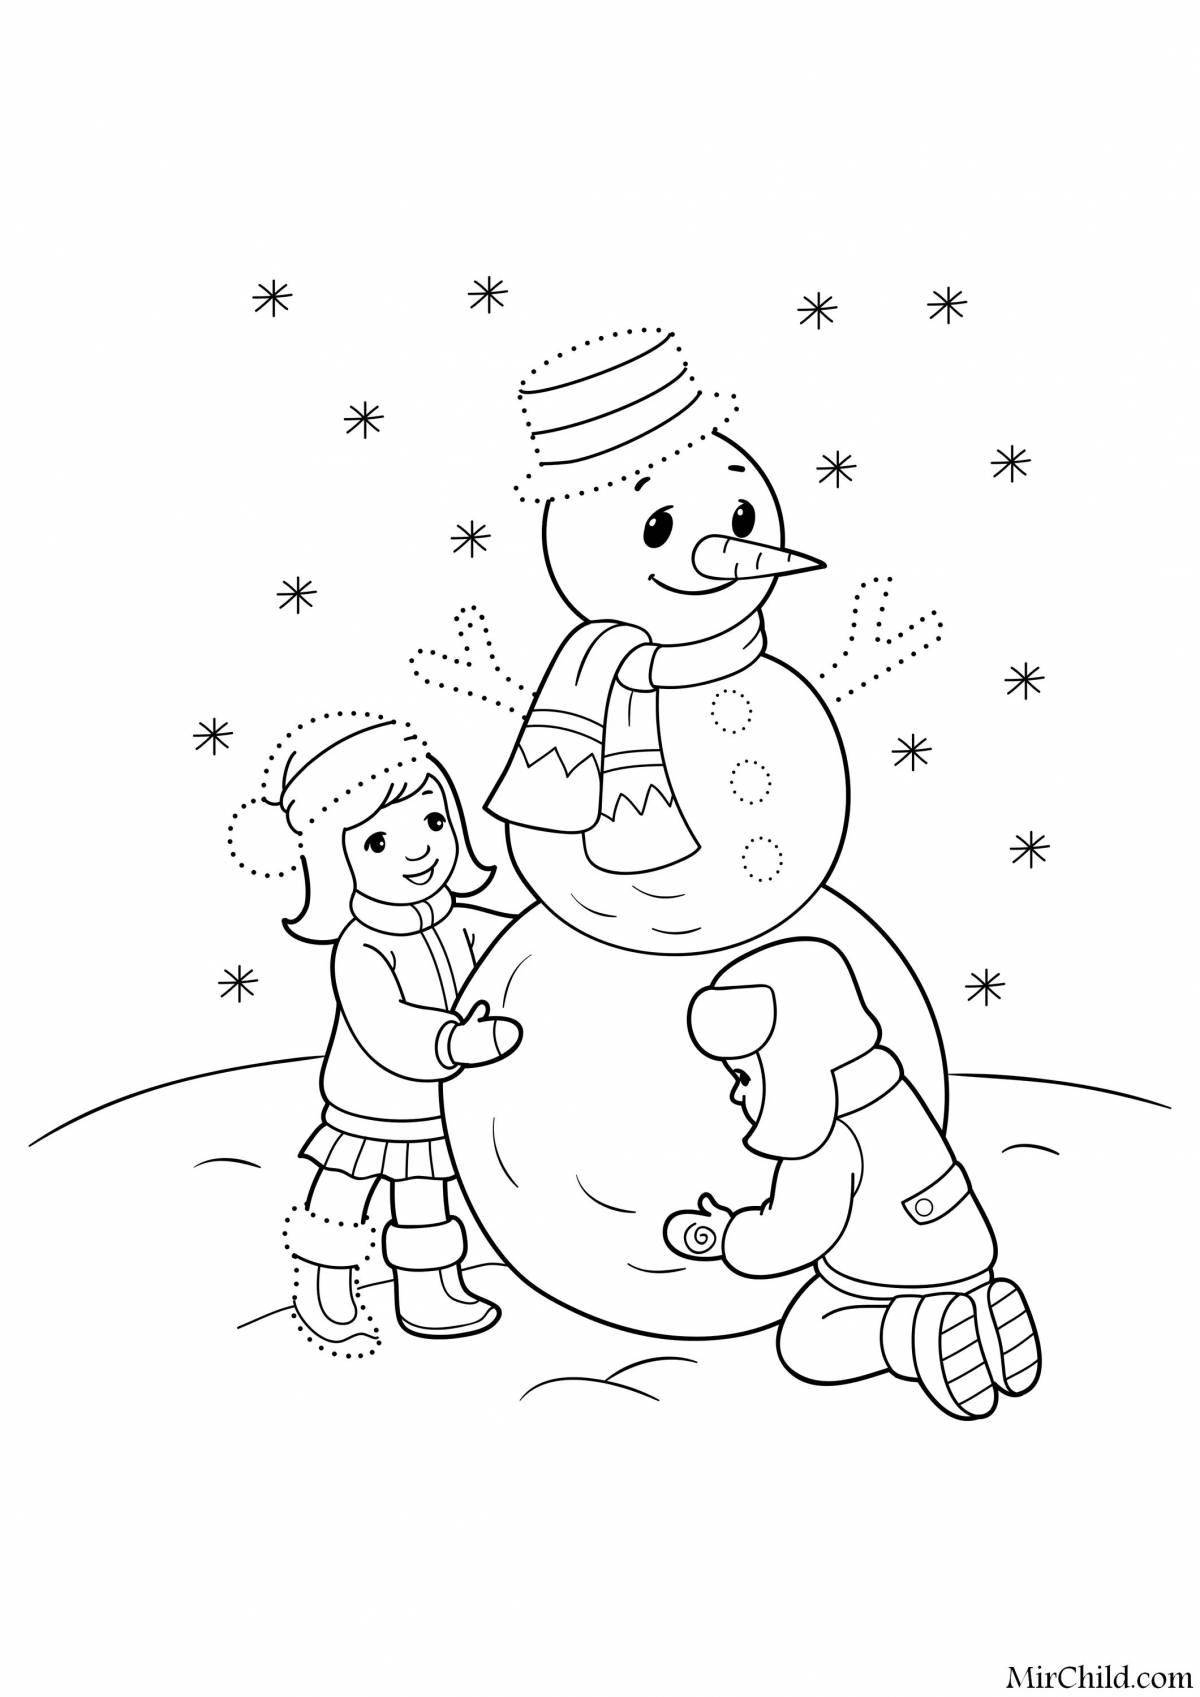 Coloring adorable snowman simulation